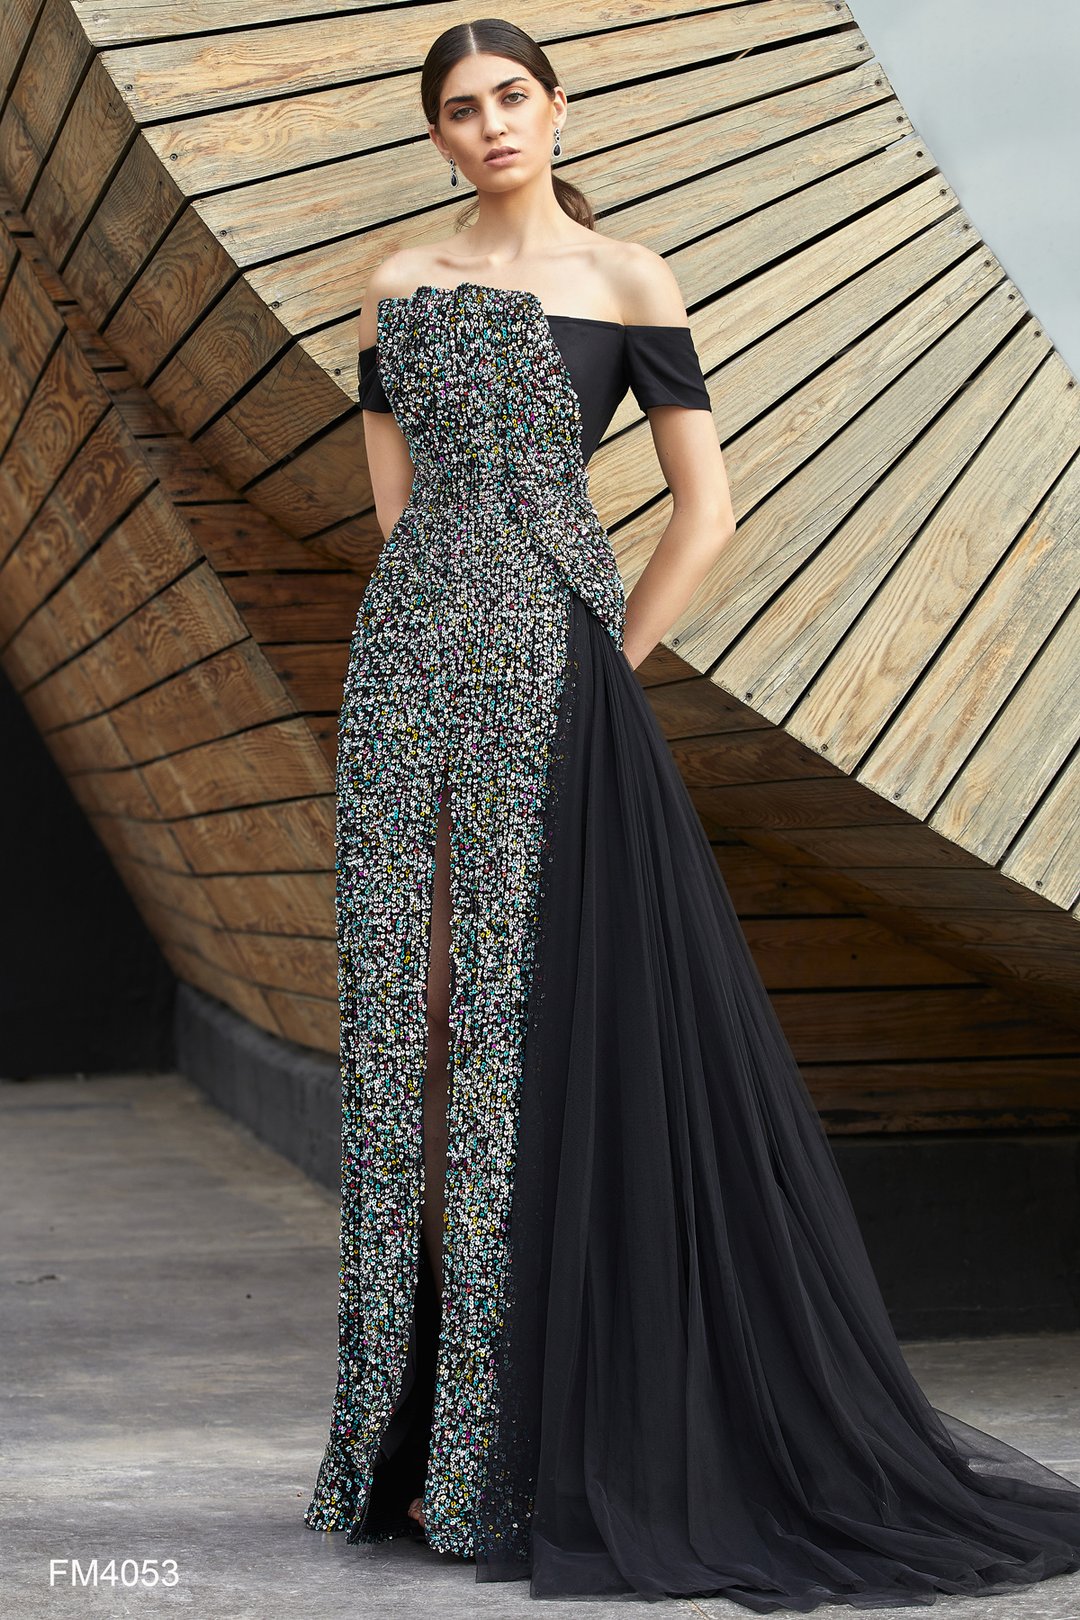 Azzure Couture FM4053 Dress - ElbisNY